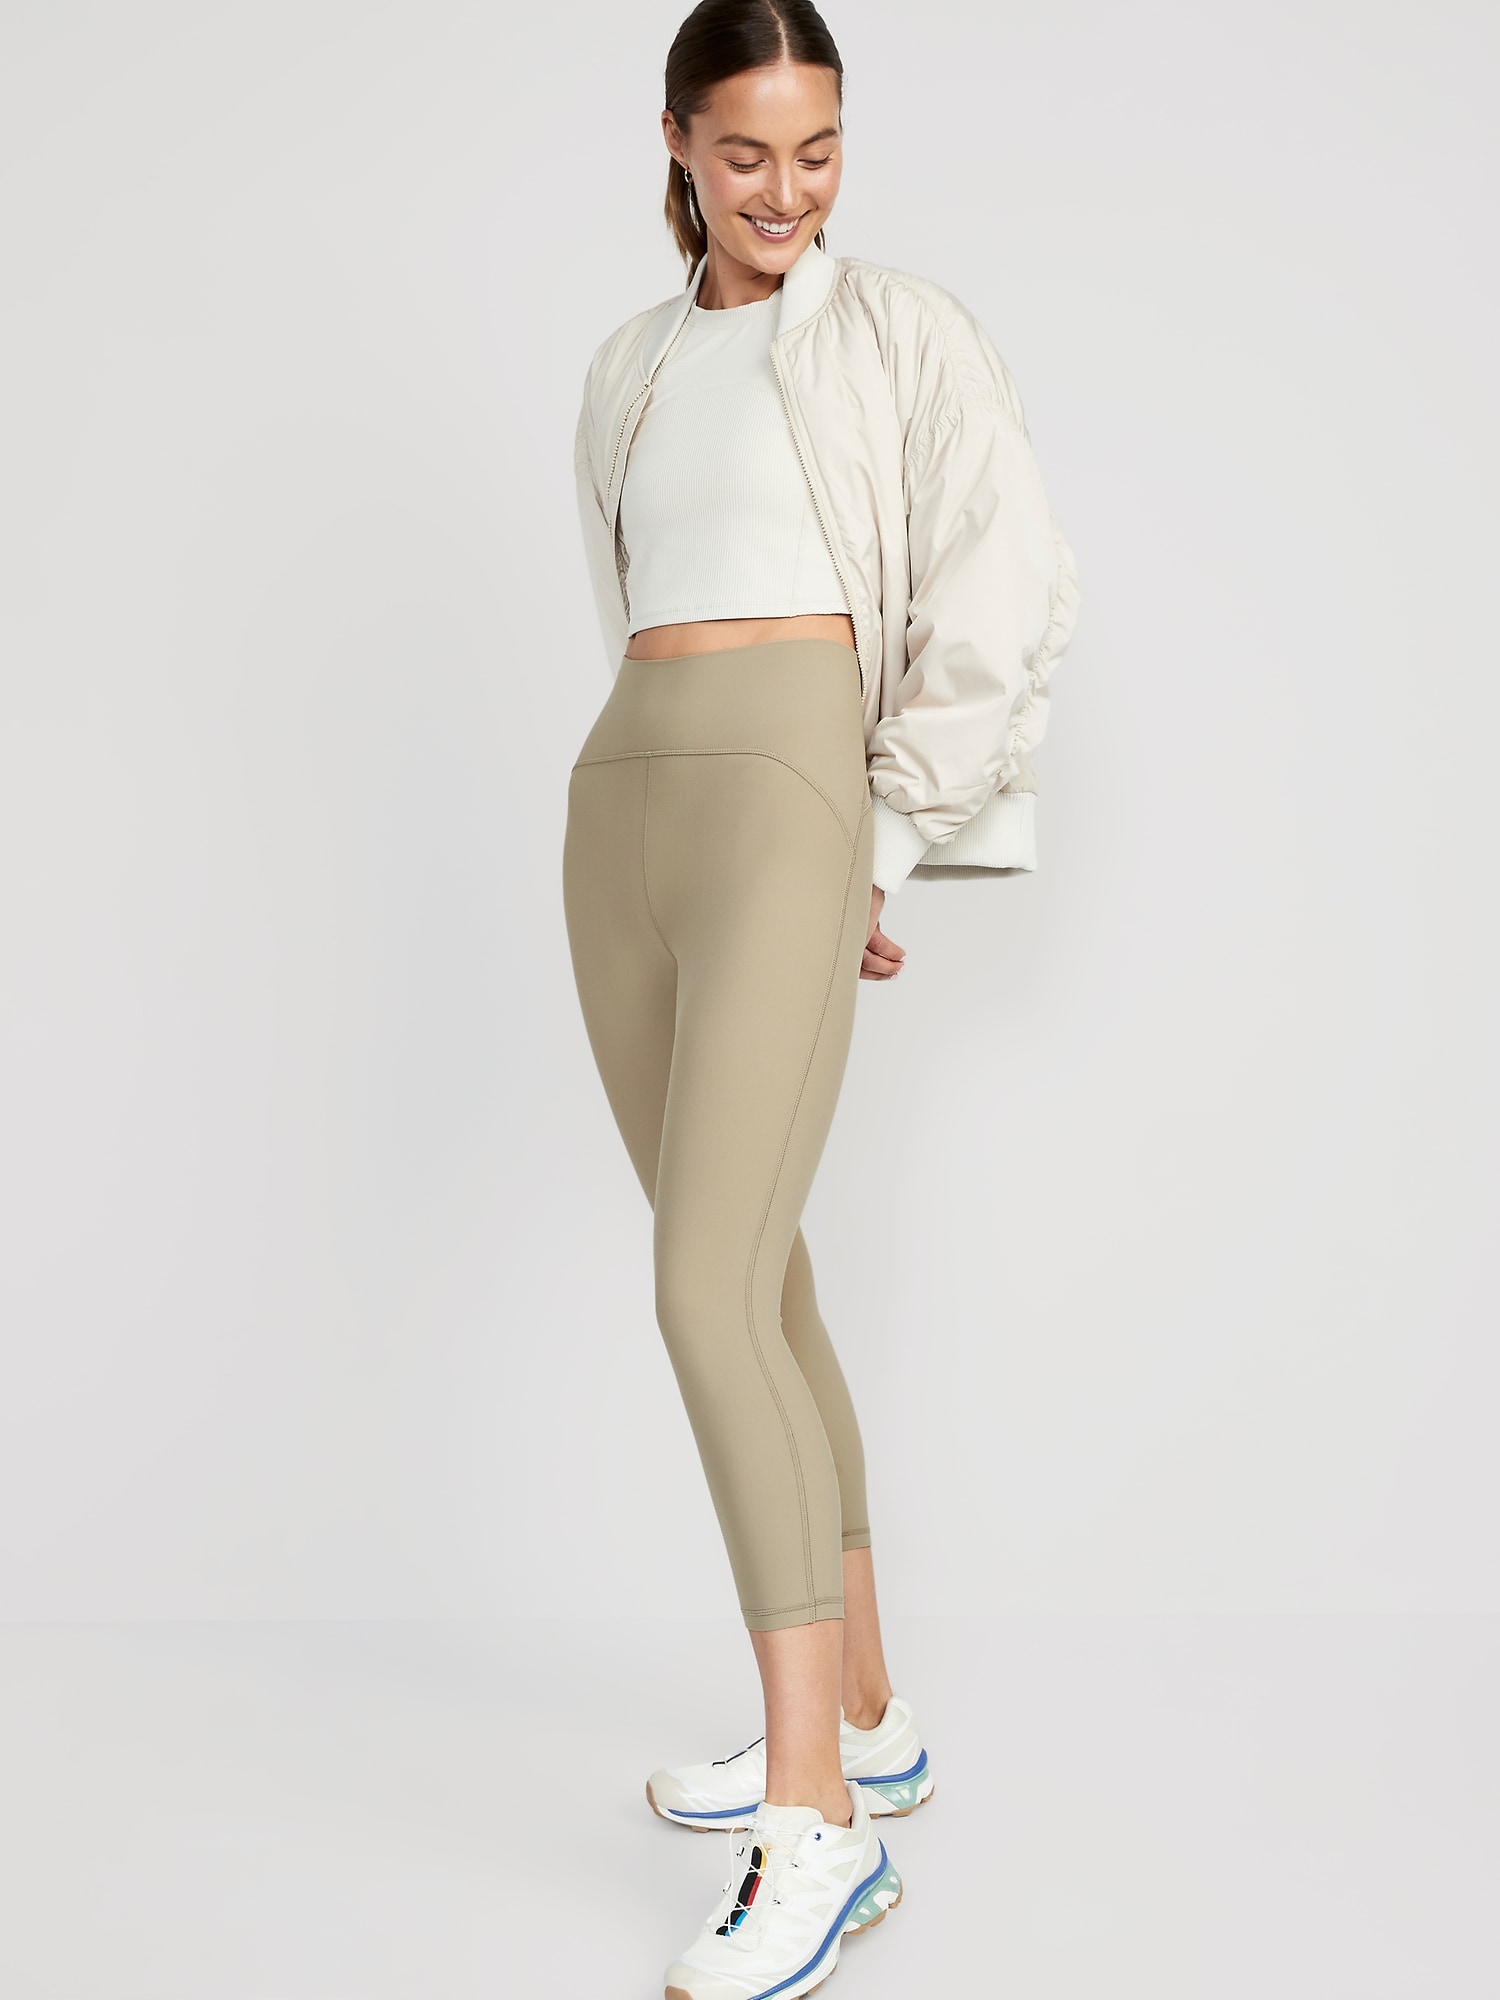 Mija – Set of 3: 2 pairs of maternity 3/4 cropped leggings + waist extender  7202 (8, Black + Beige) : Amazon.co.uk: Fashion